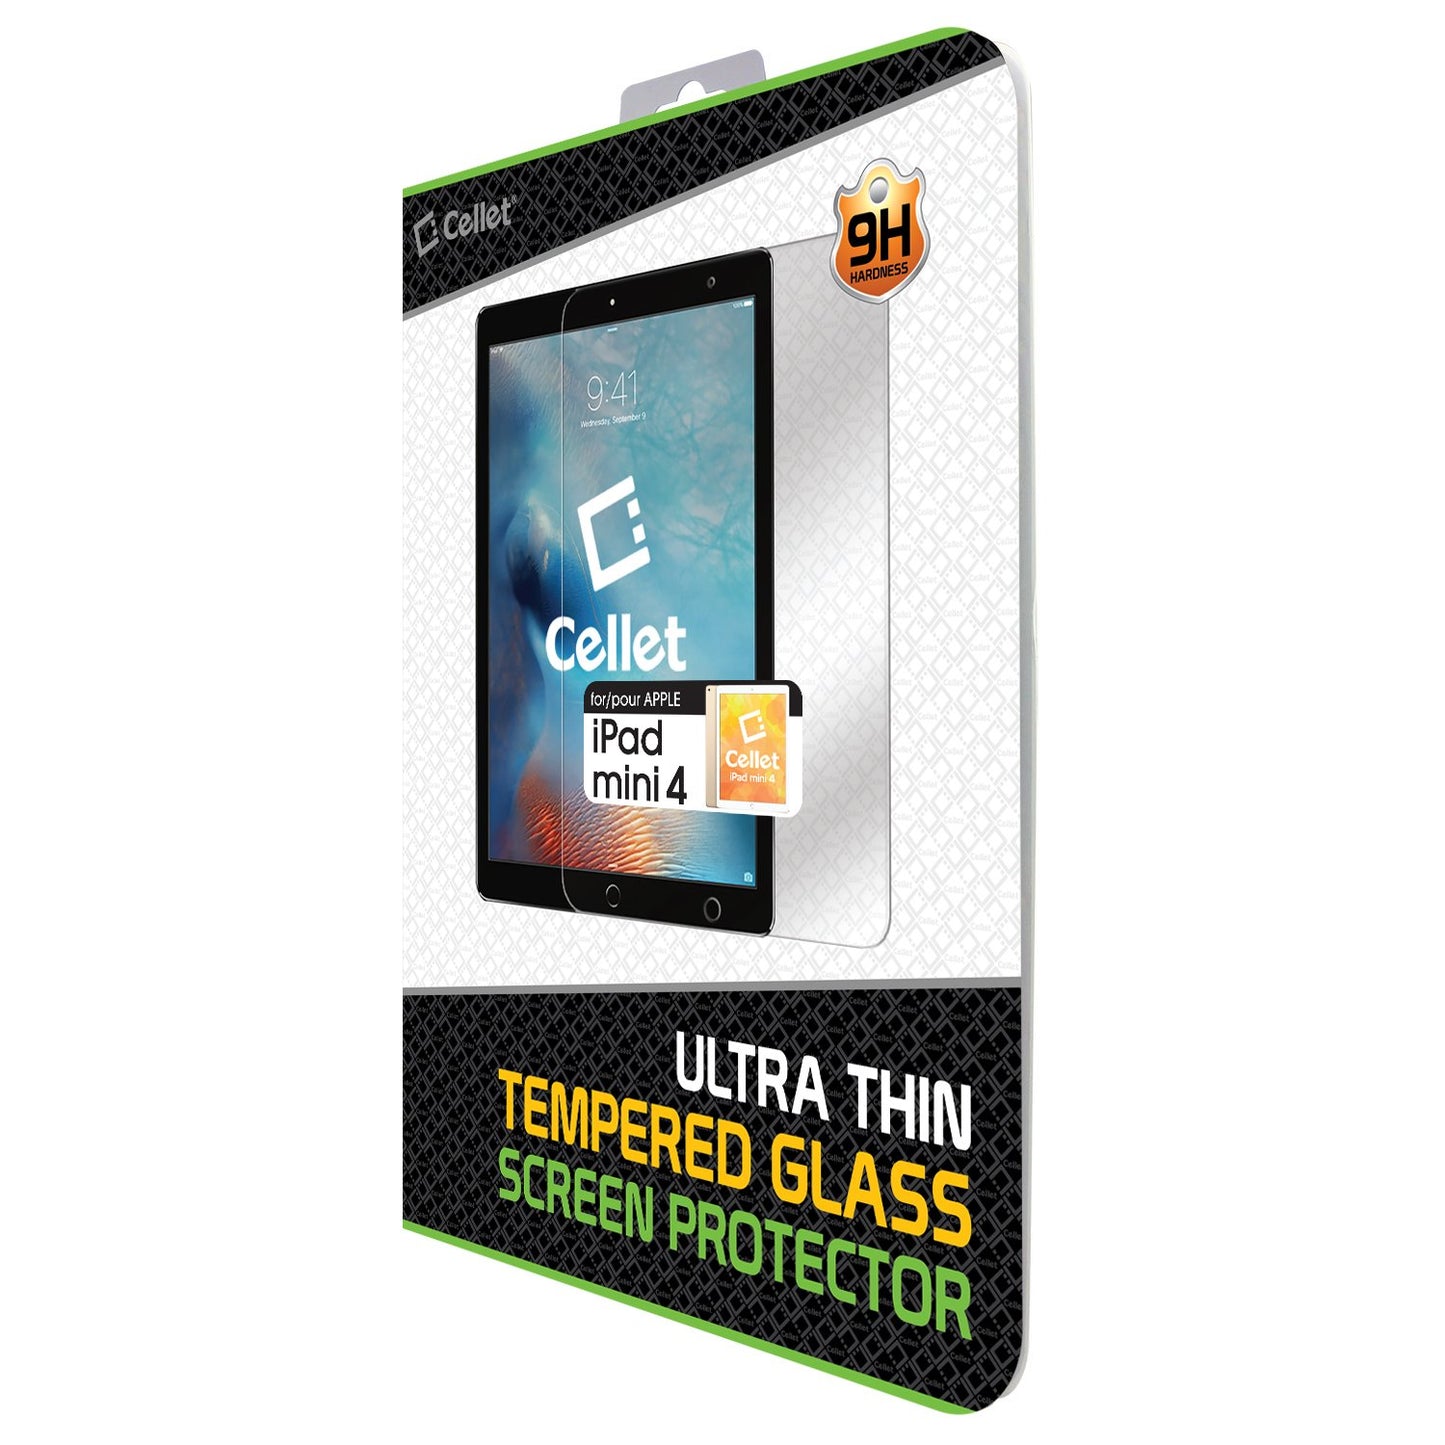 SGIPHMINI4 - iPad Mini 4 Tempered Glass Screen Protector, Cellet Premium Tempered Glass Screen Protector for iPad Mini 4